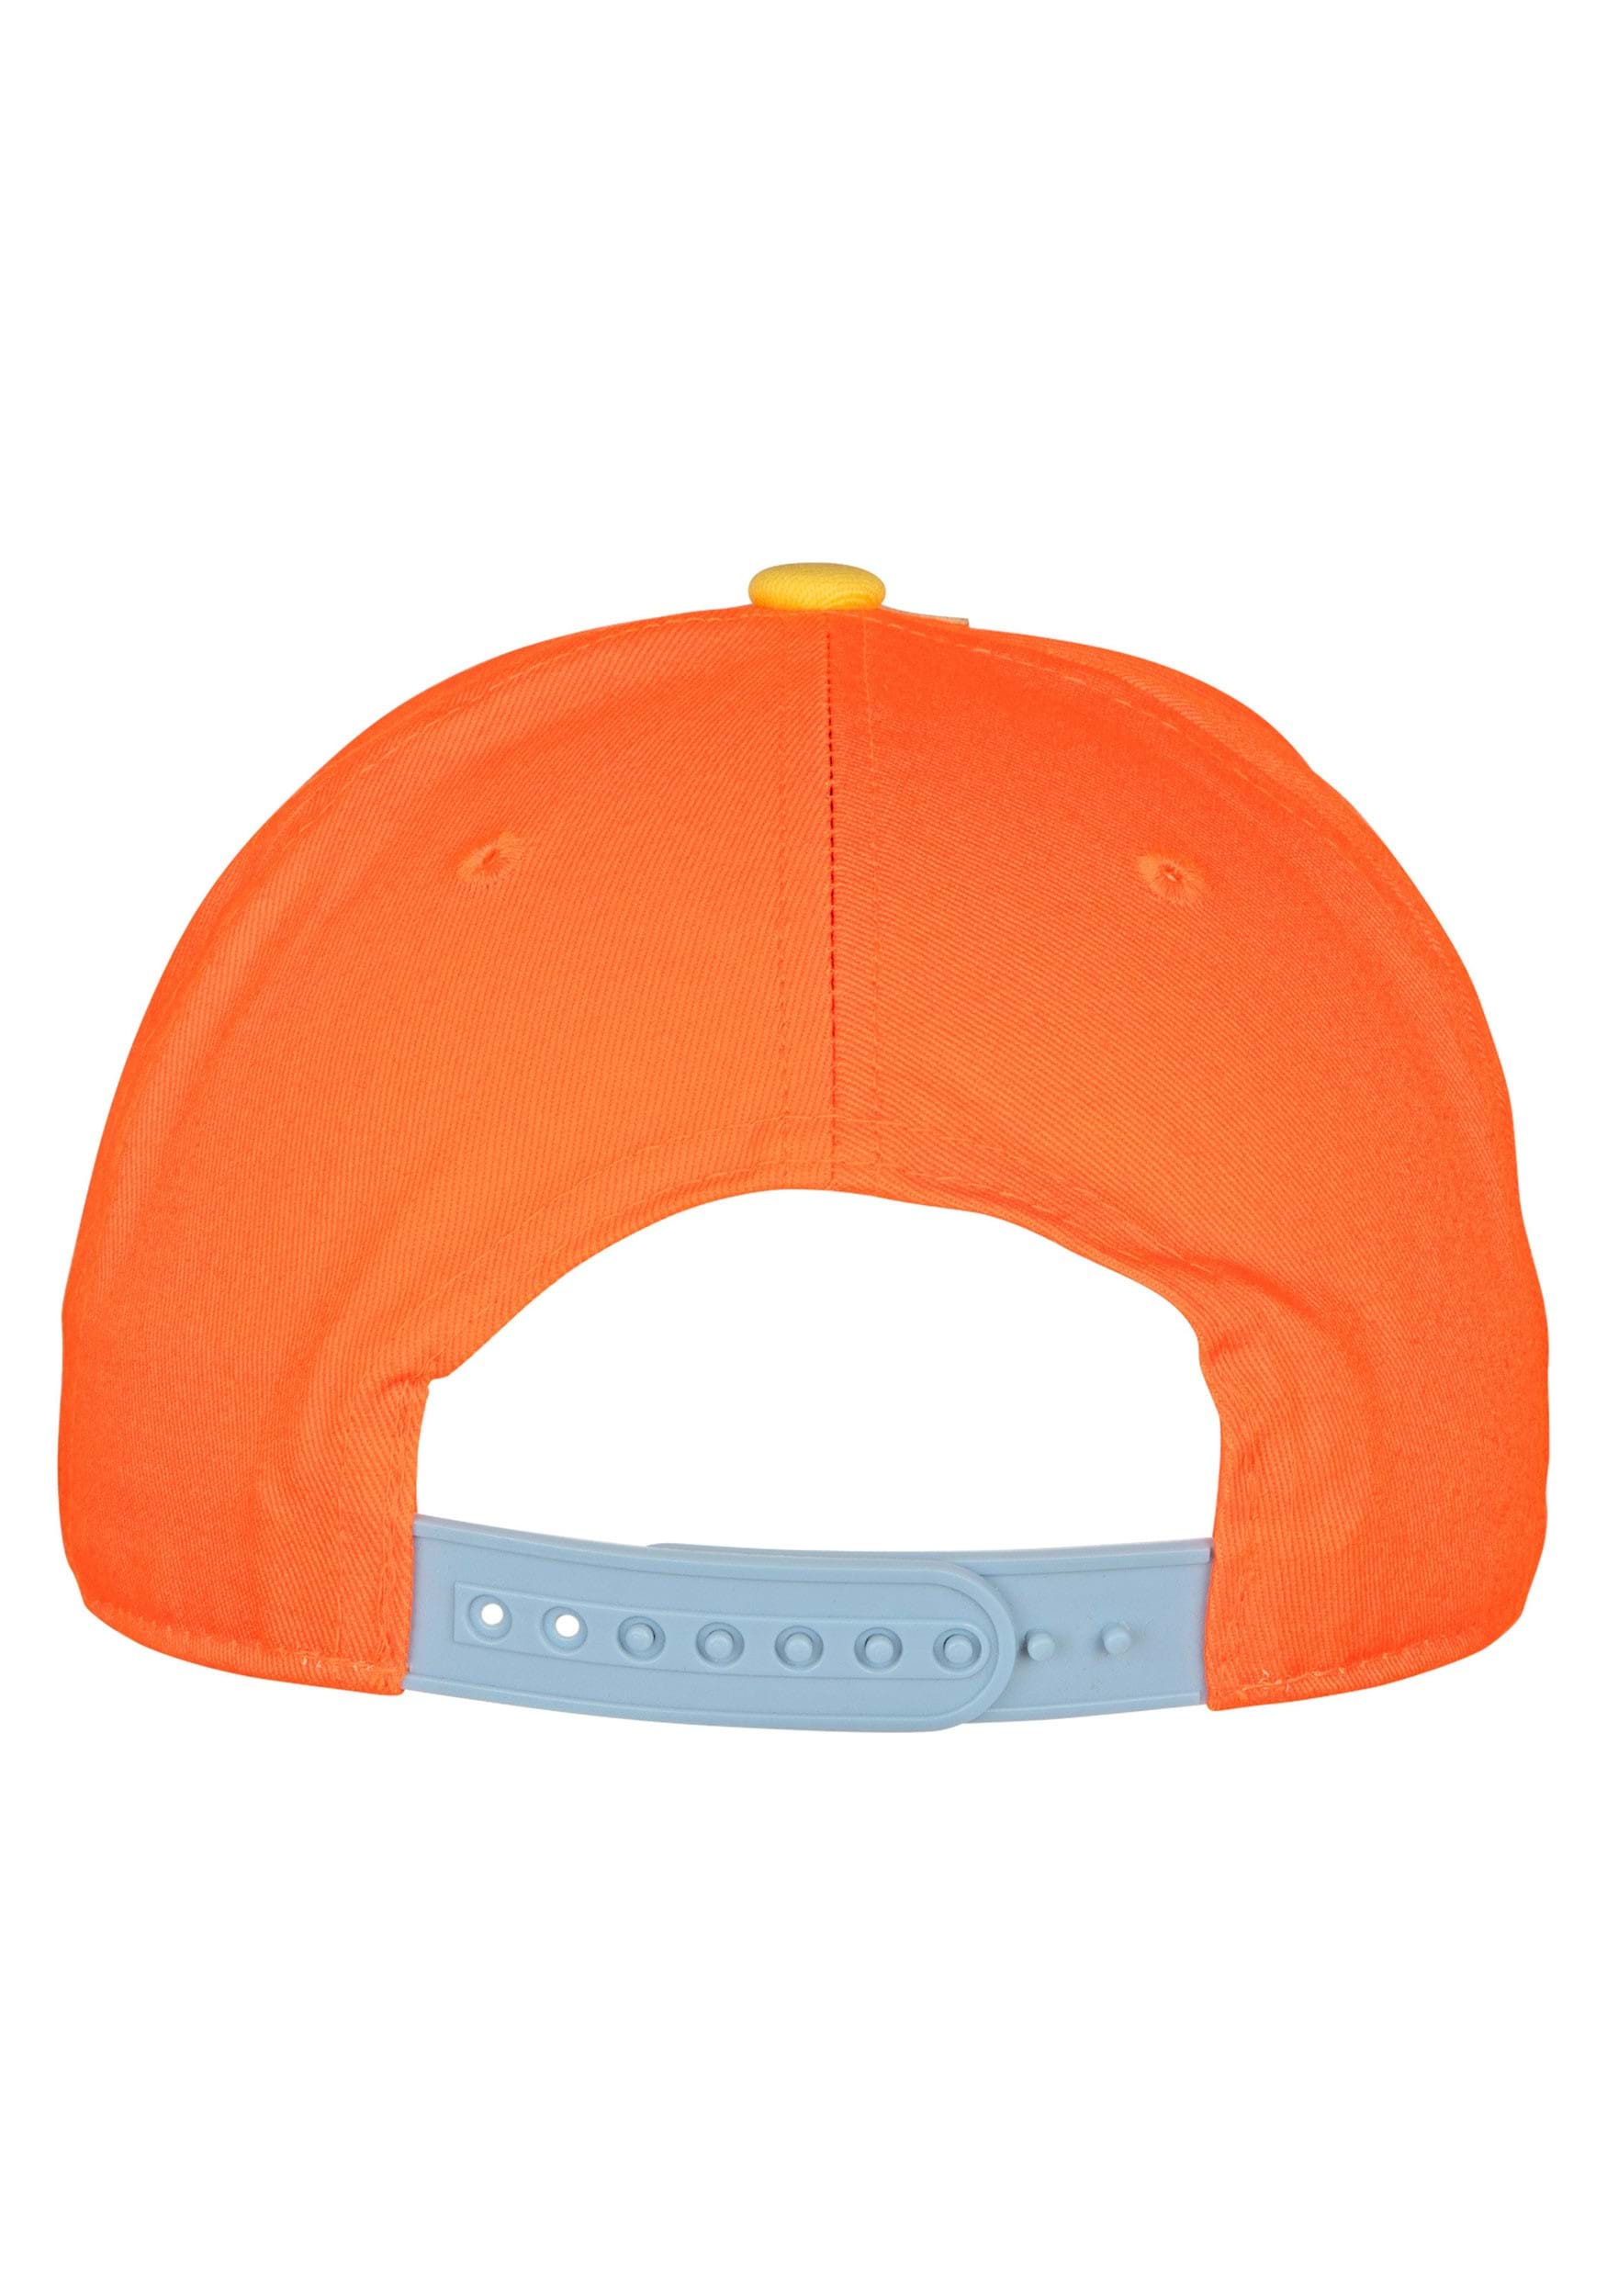 Avatar Airbender Mark Hat , Baseball Hat Accessories